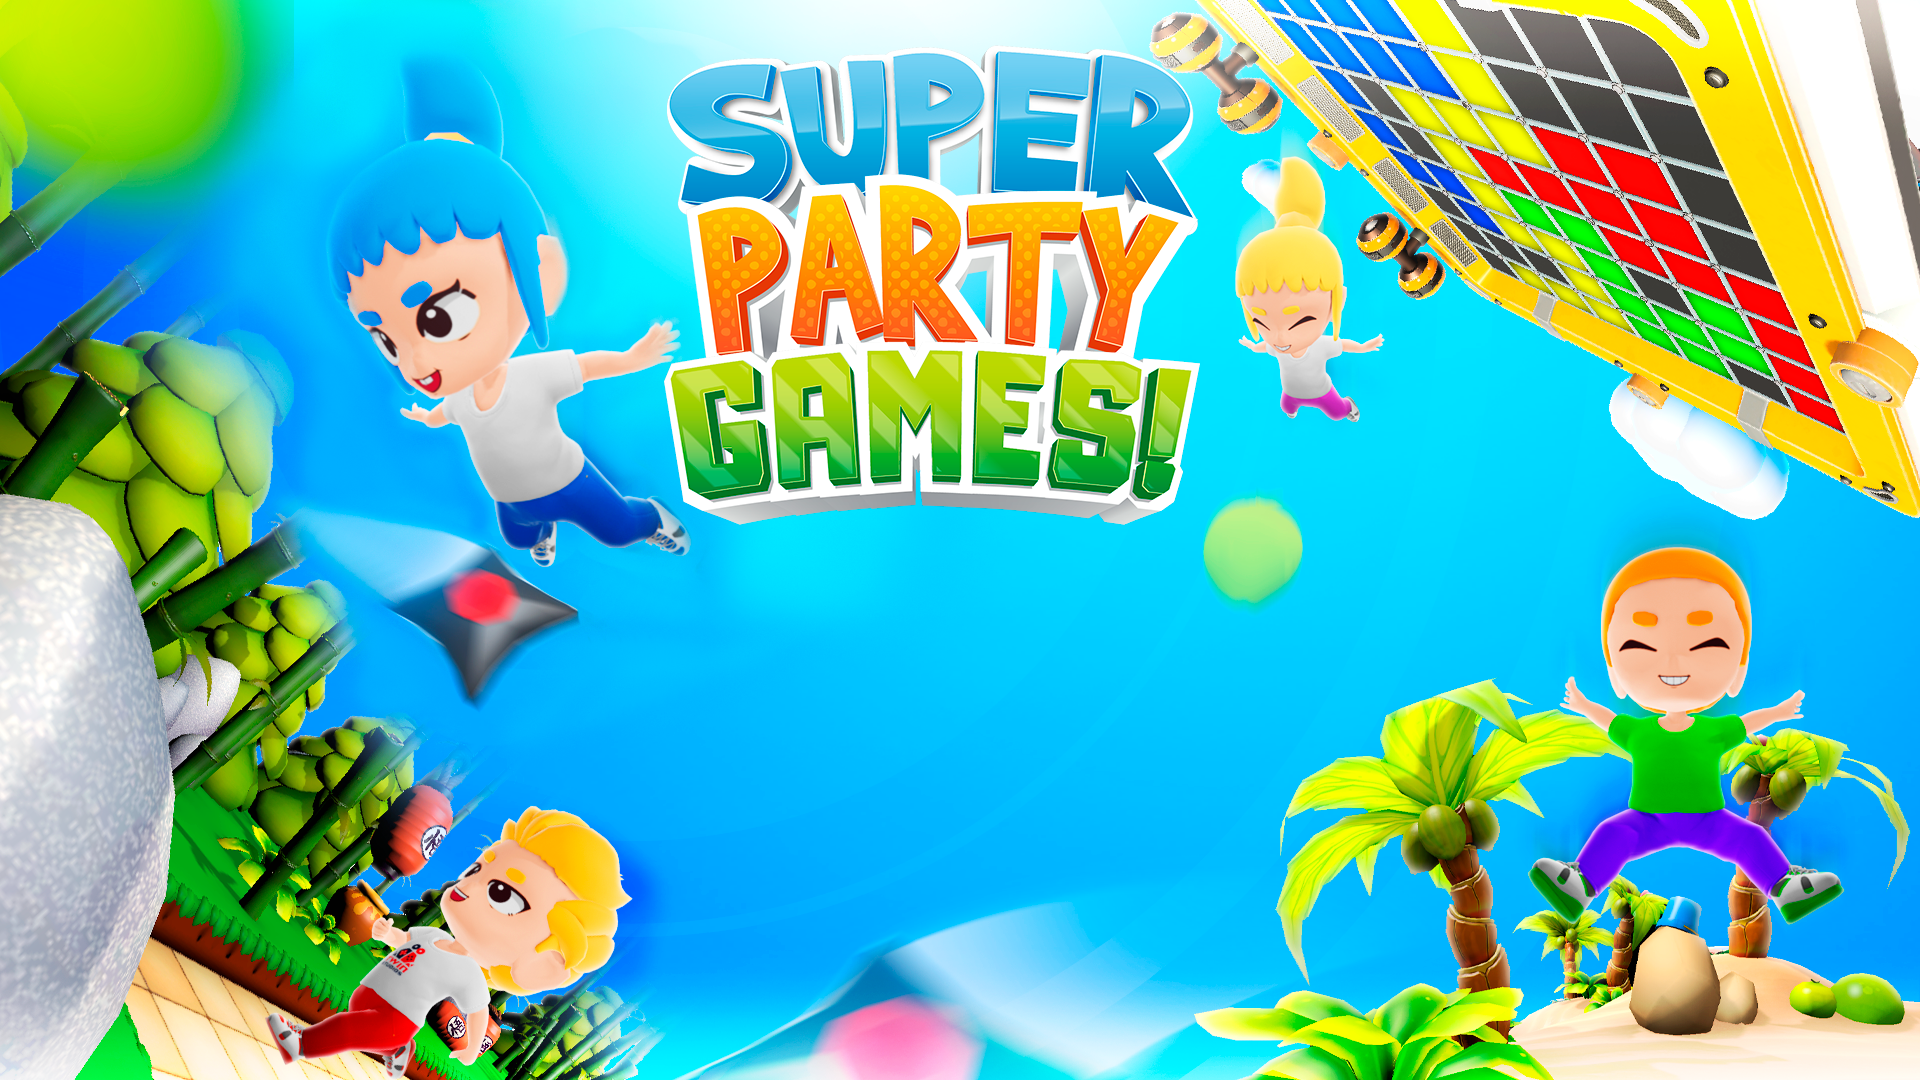 Super Party Games Online